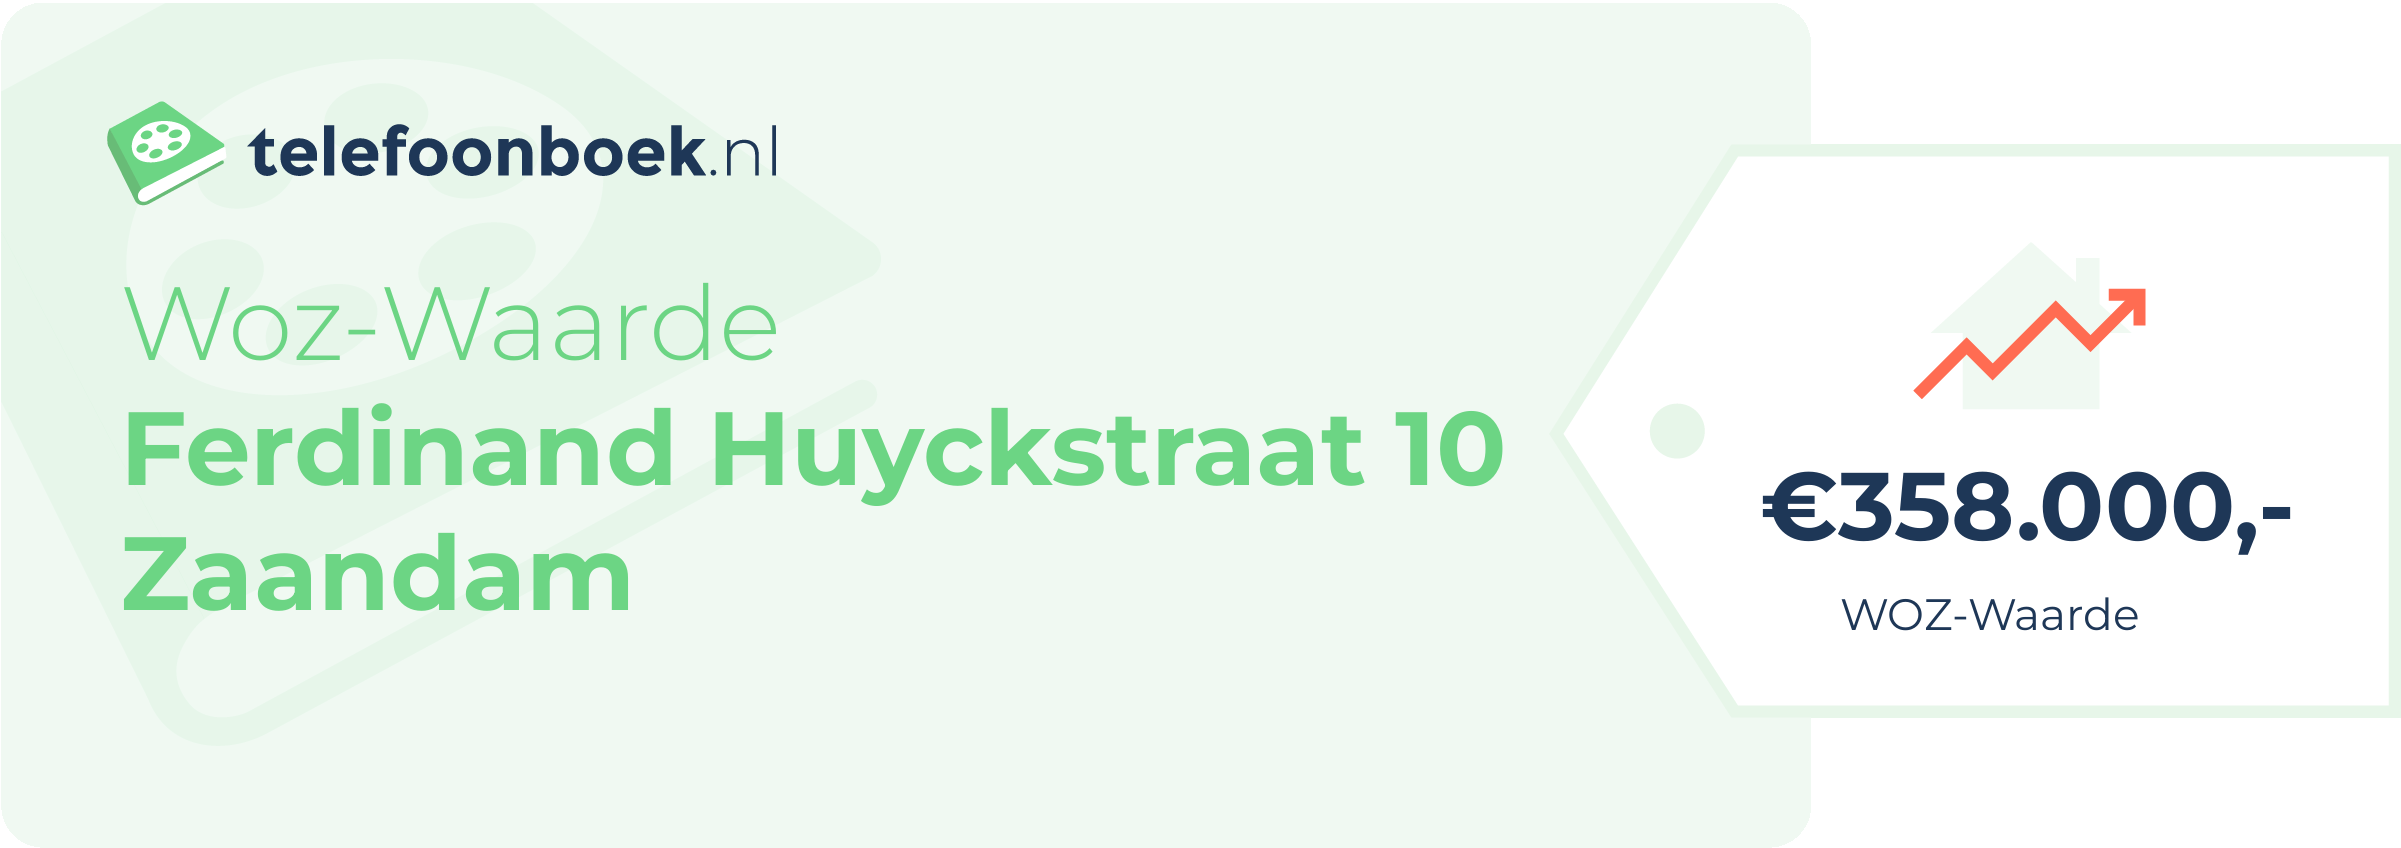 WOZ-waarde Ferdinand Huyckstraat 10 Zaandam